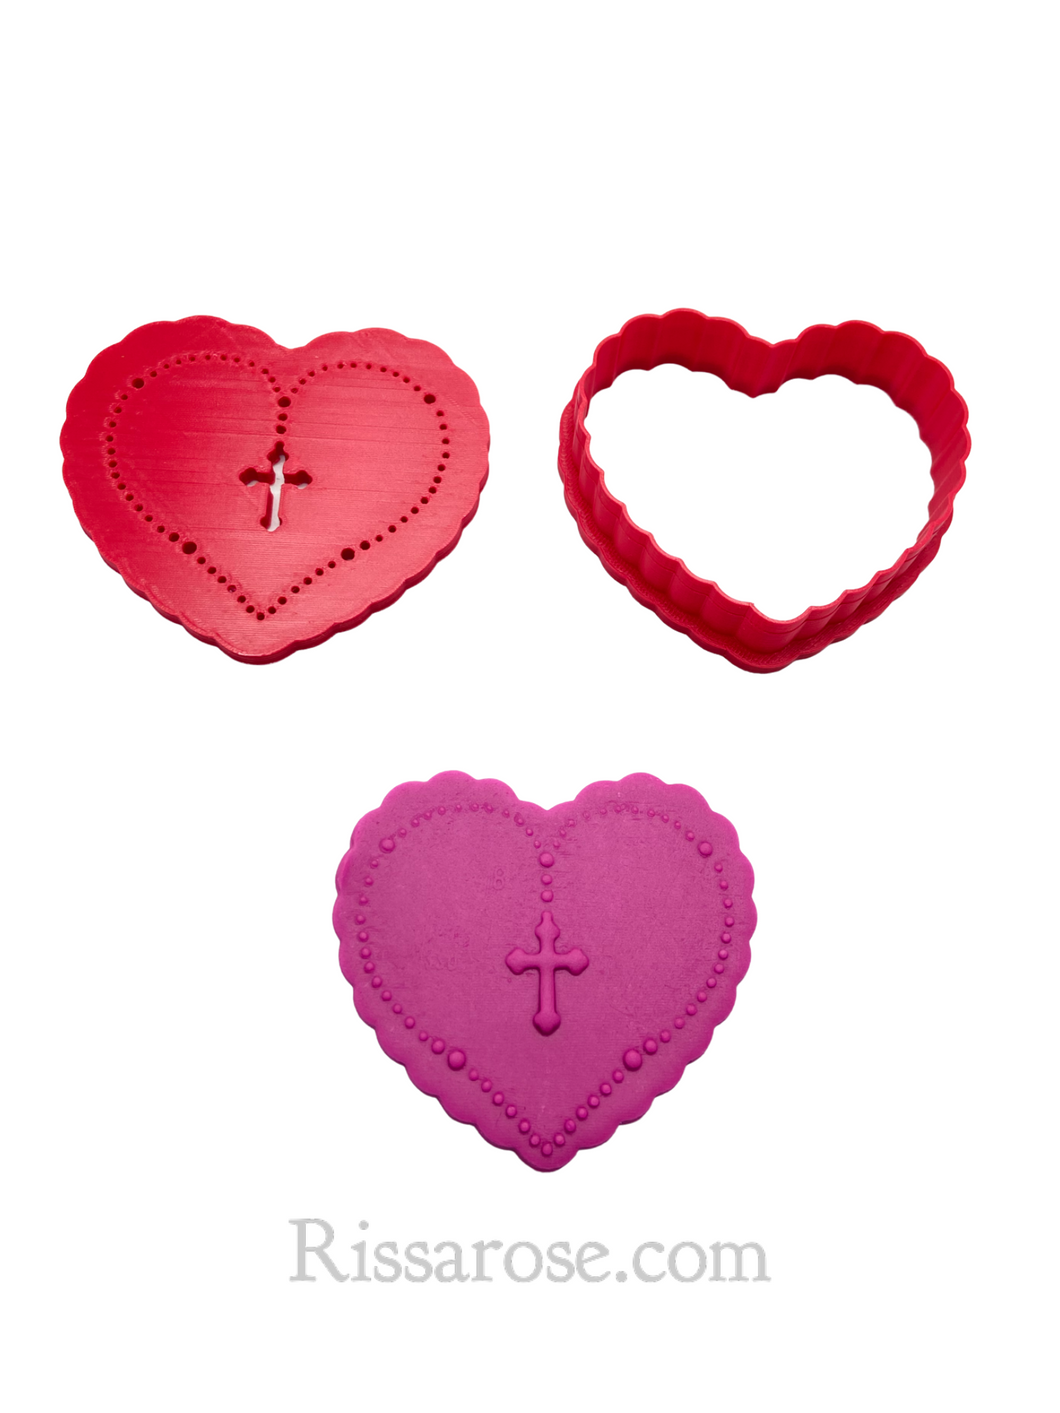 rosary cross cookie cutter heart shaped baptism fondant debosser christening